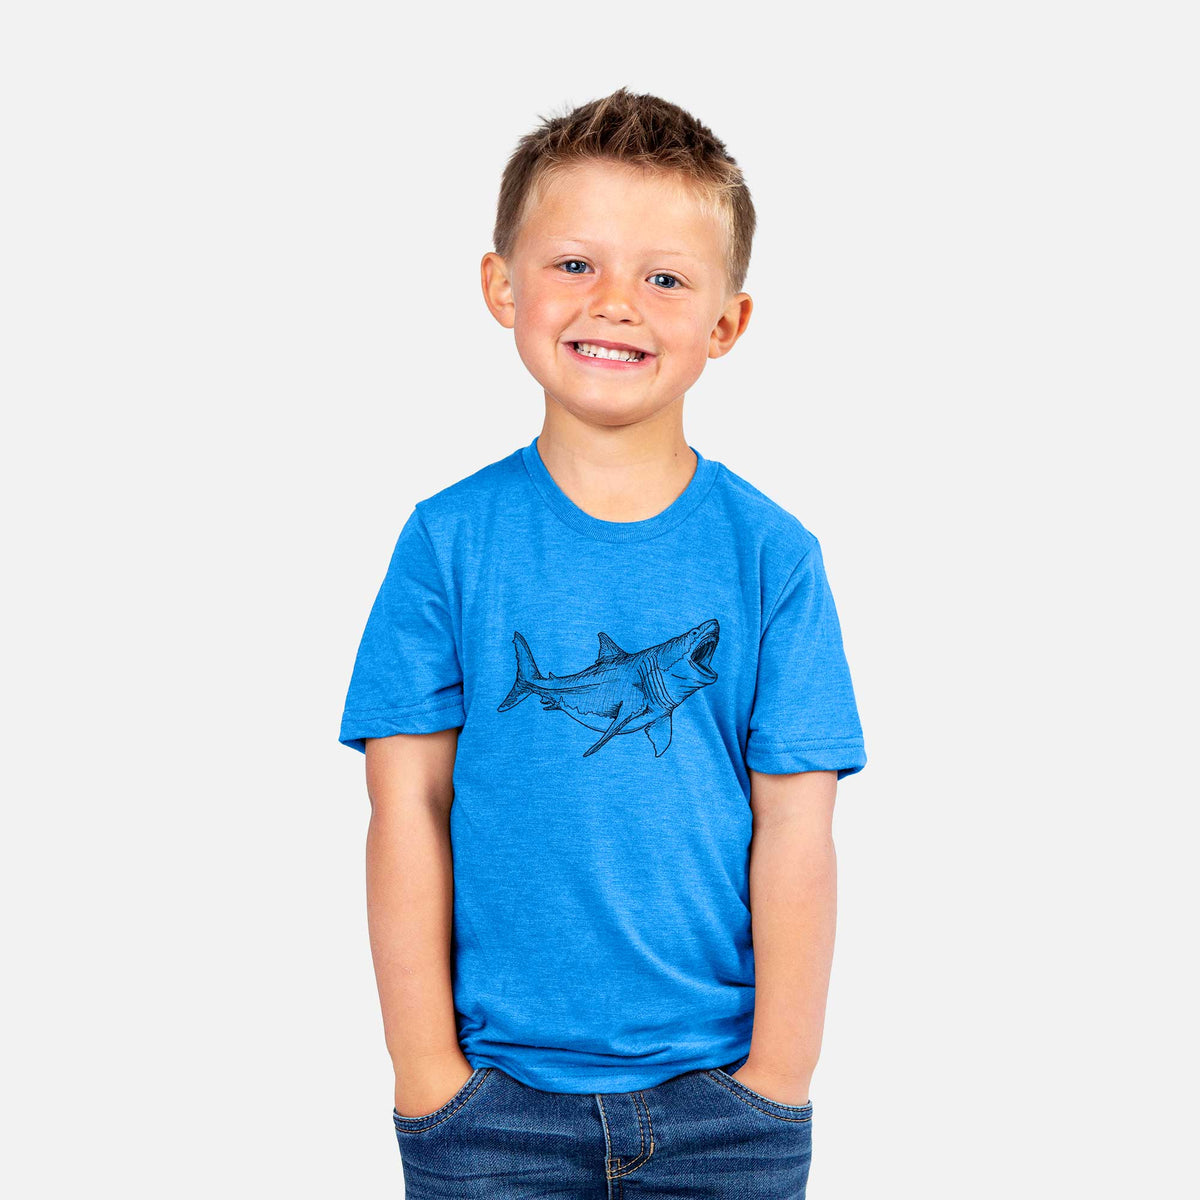 Megalodon - Otodus Megalodon - Kids Shirt